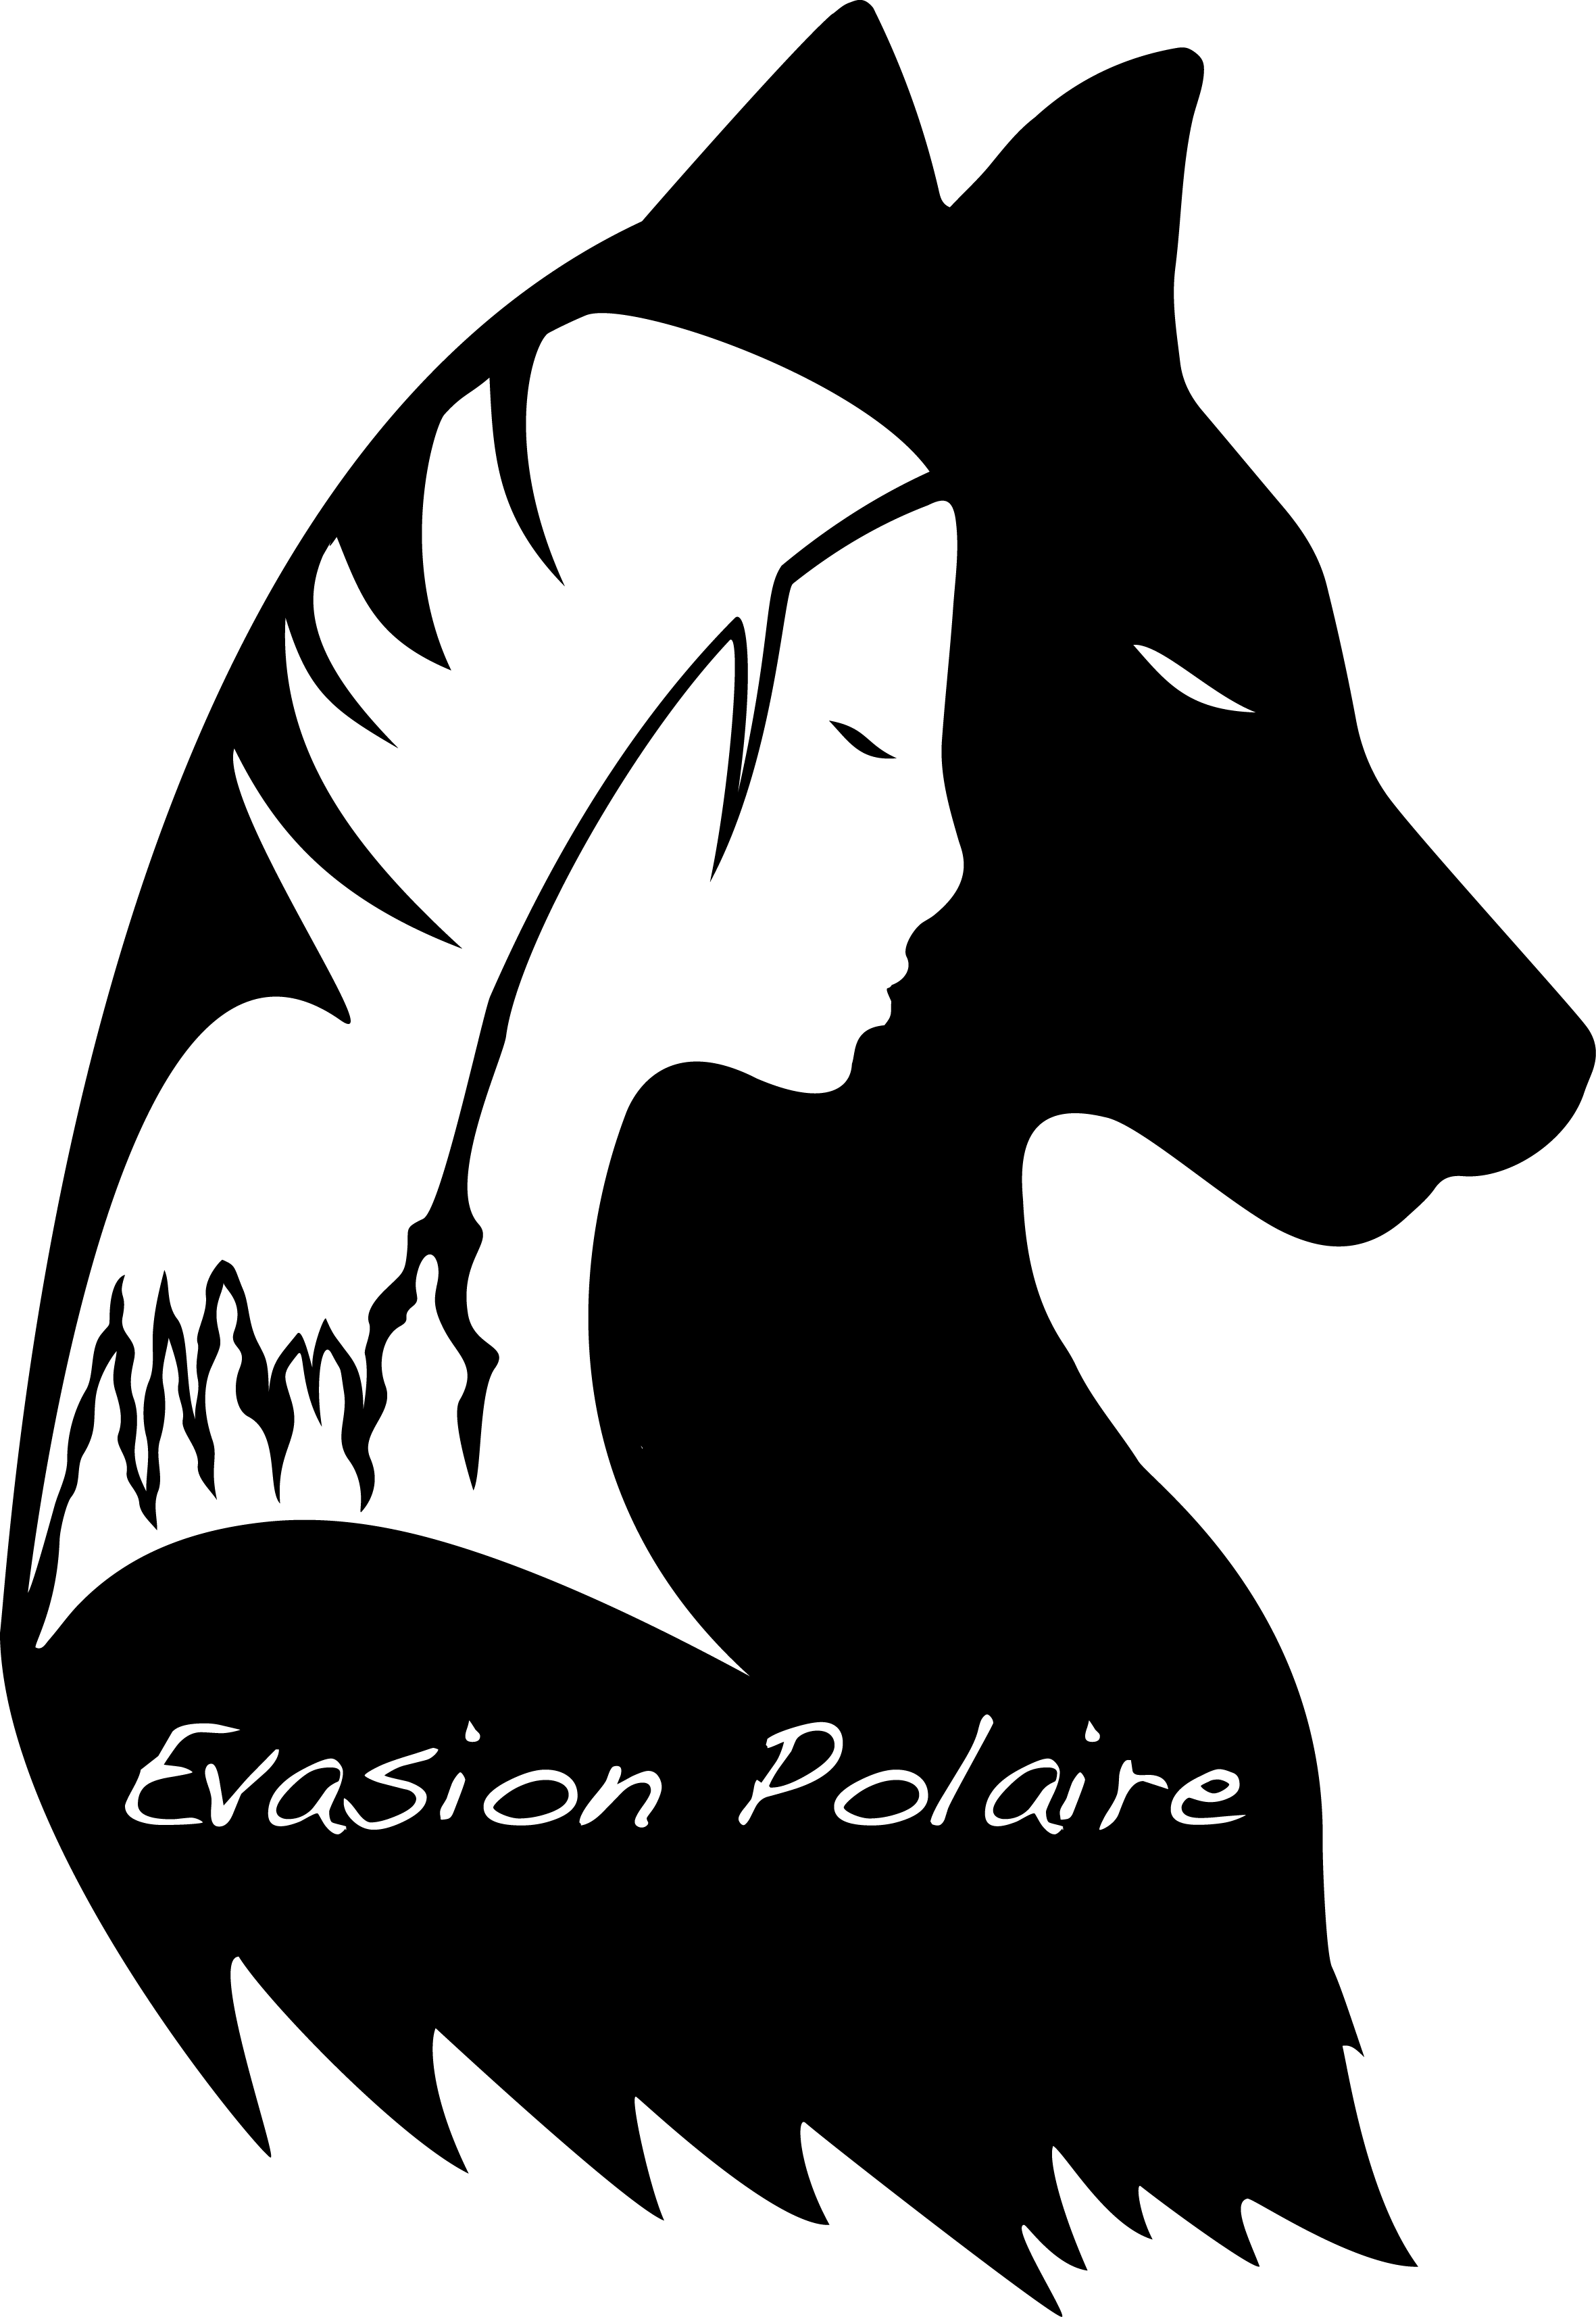 Logo Evasion polaire.png